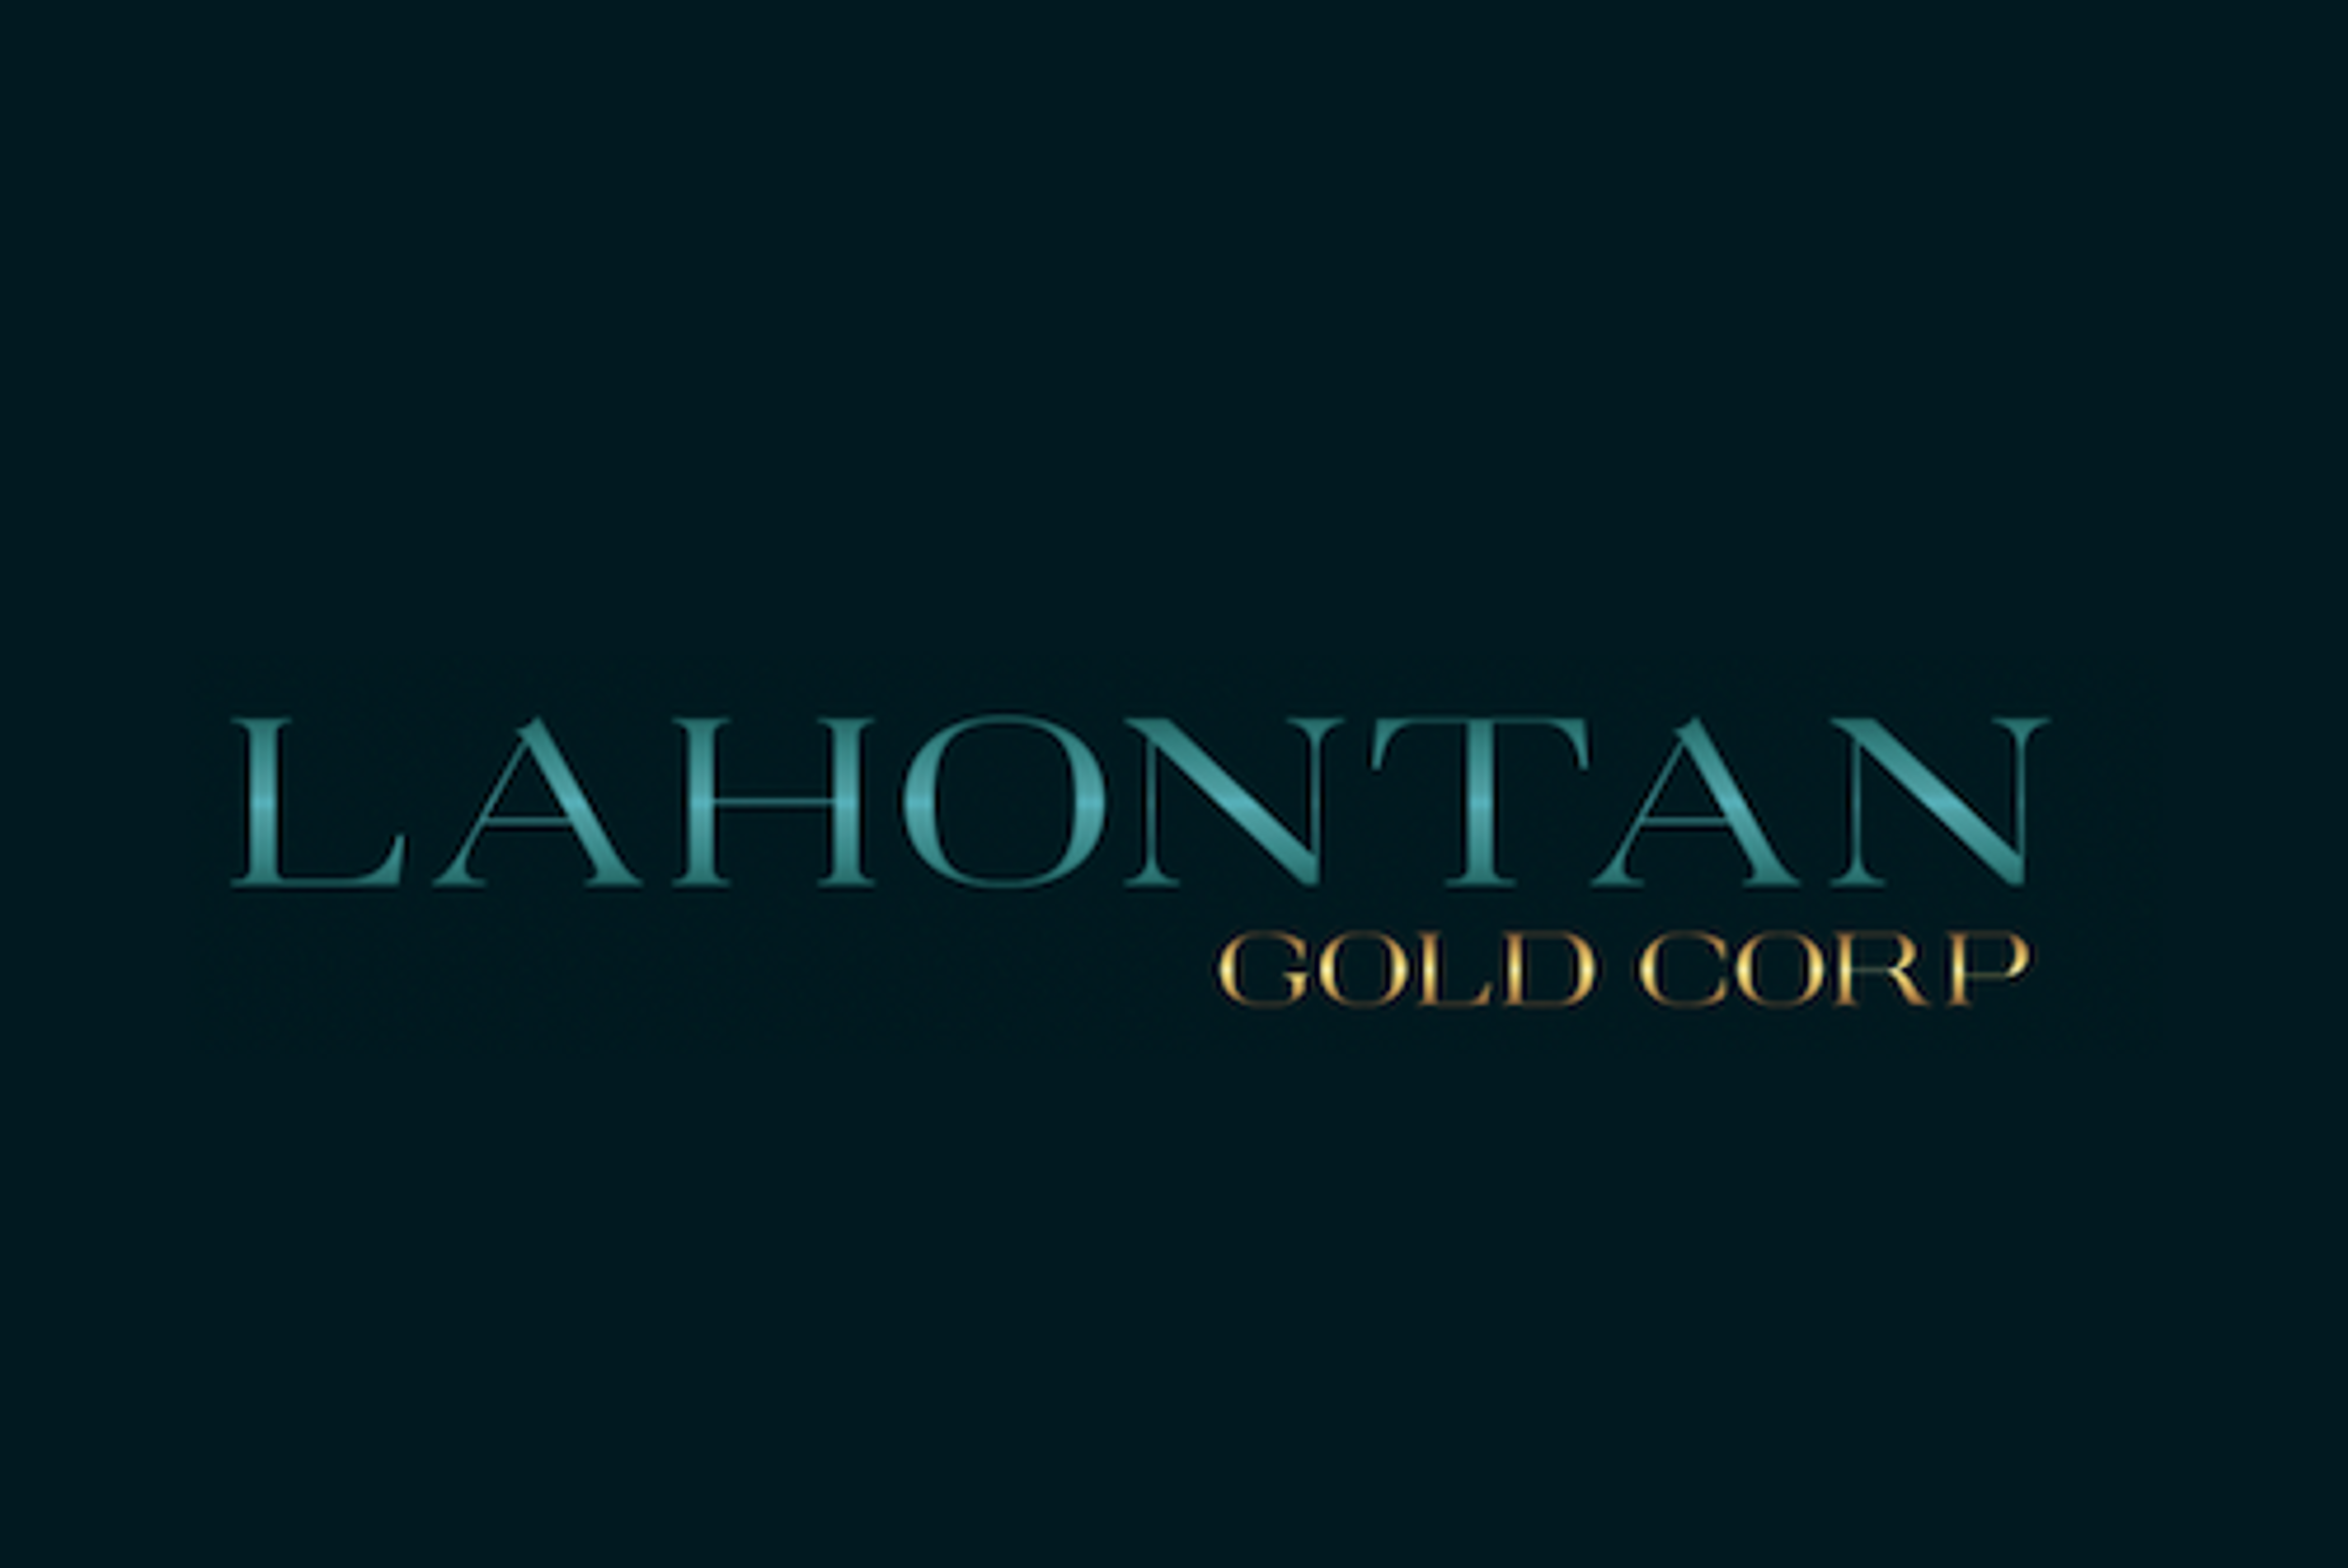 Lahontan Drills Thick Intervals of High-Grade Gold at Santa Fe: 100.3M Grading 3.79 GPT Au Eq Incl. 4.9M Grading 12.45 GPT Au Eq